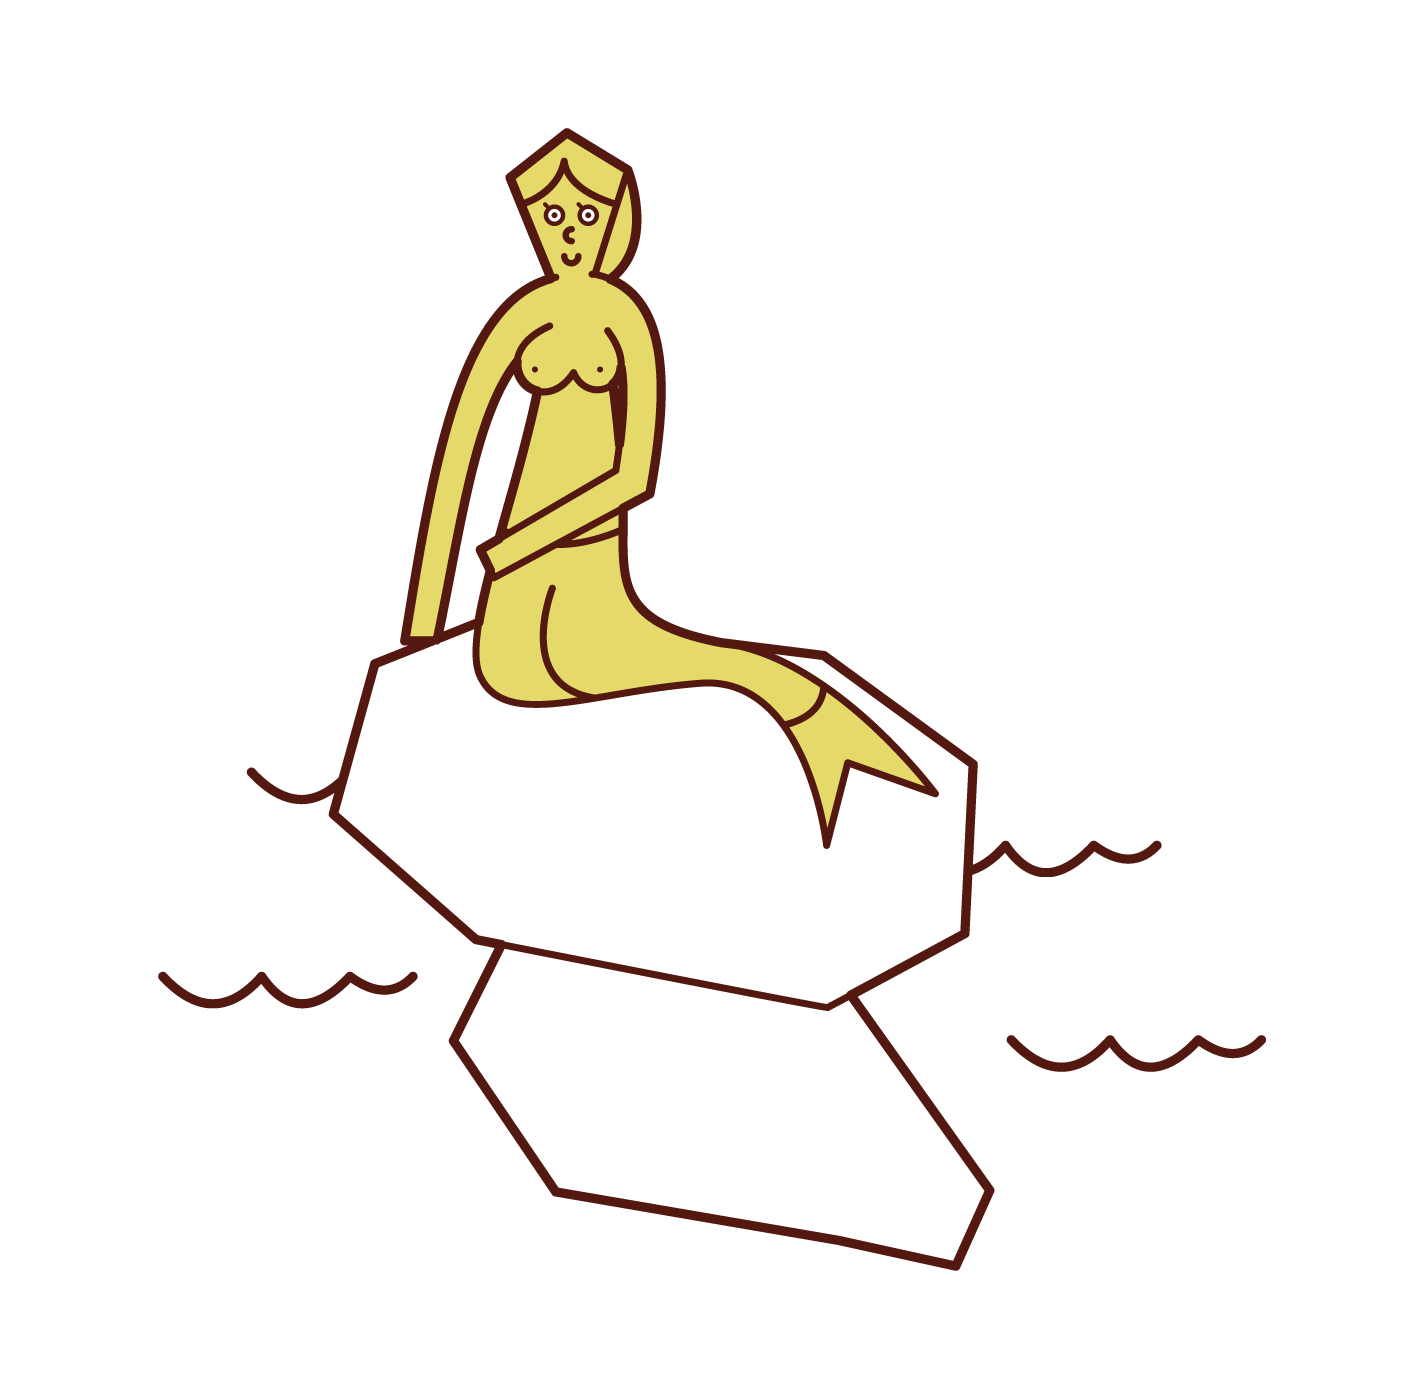 Illustration of the mermaid princess statue